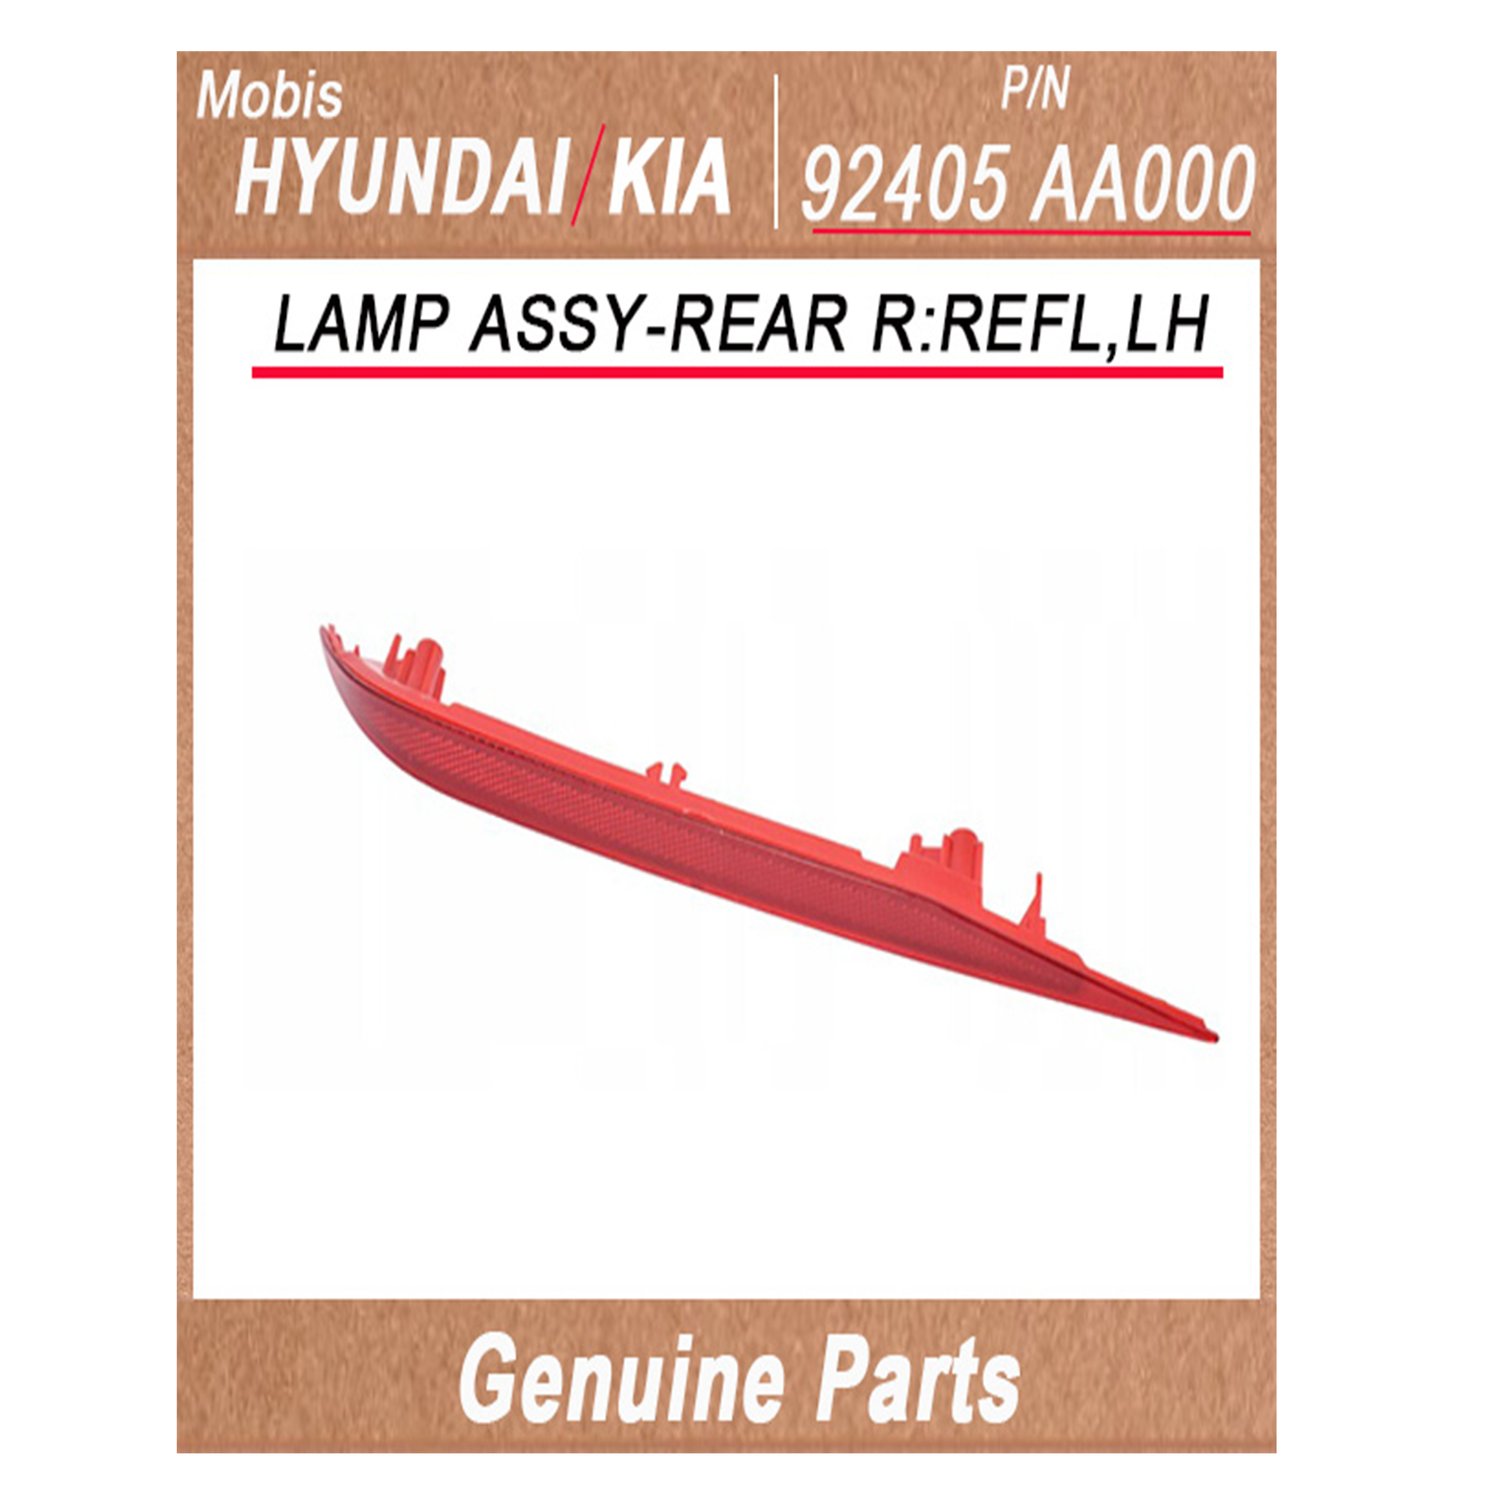 92405AA000 _ LAMP ASSY_REAR R_REFL_LH _ Genuine Korean Automotive Spare Parts _ Hyundai Kia _Mobis_